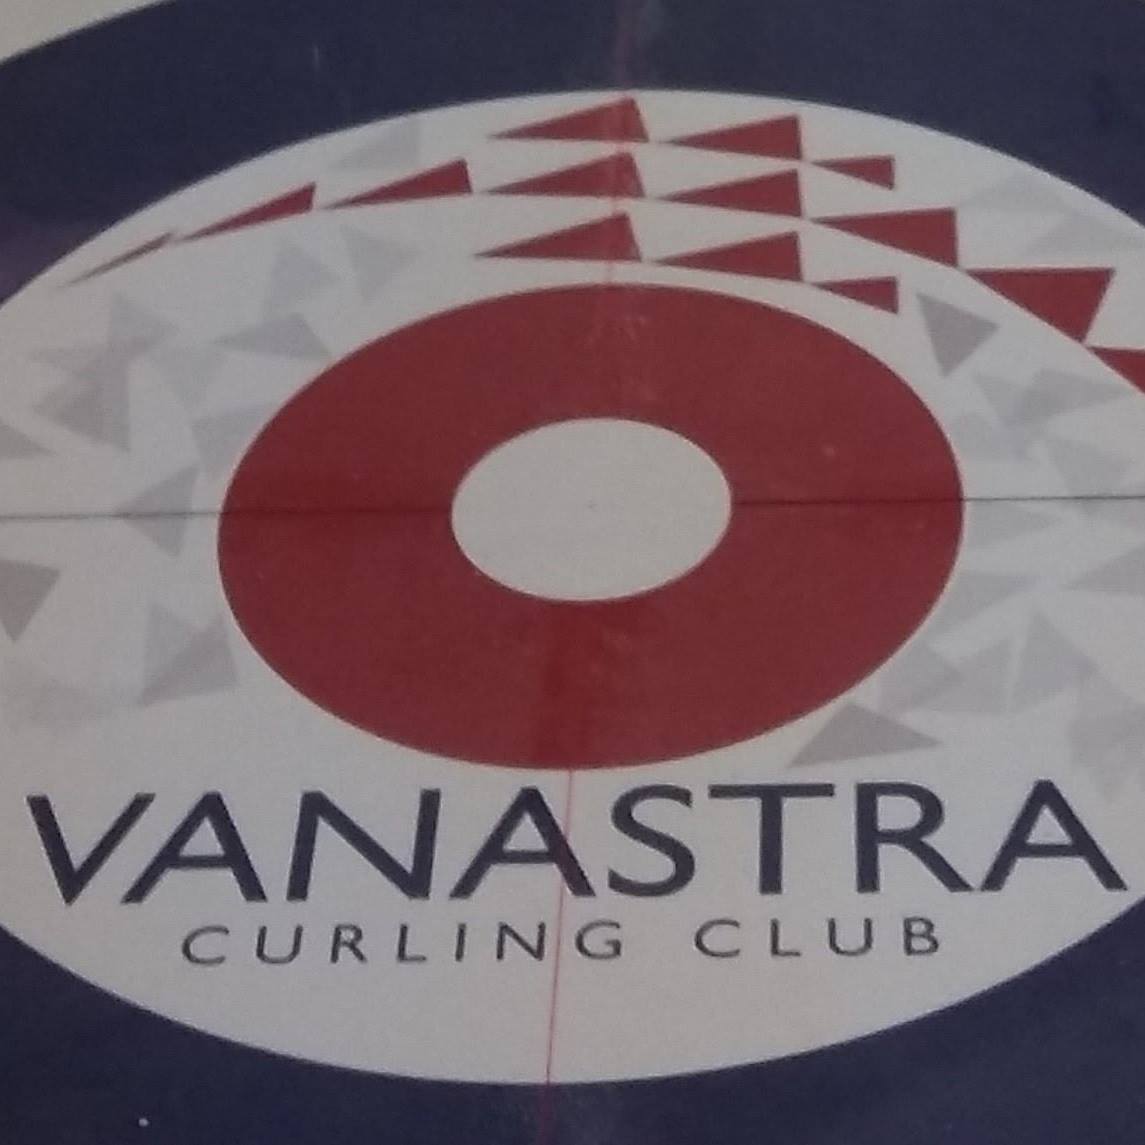 Vanastra Curling Club Fish Fry - Drive Through Pick Up (5:00PM - 5:30PM)